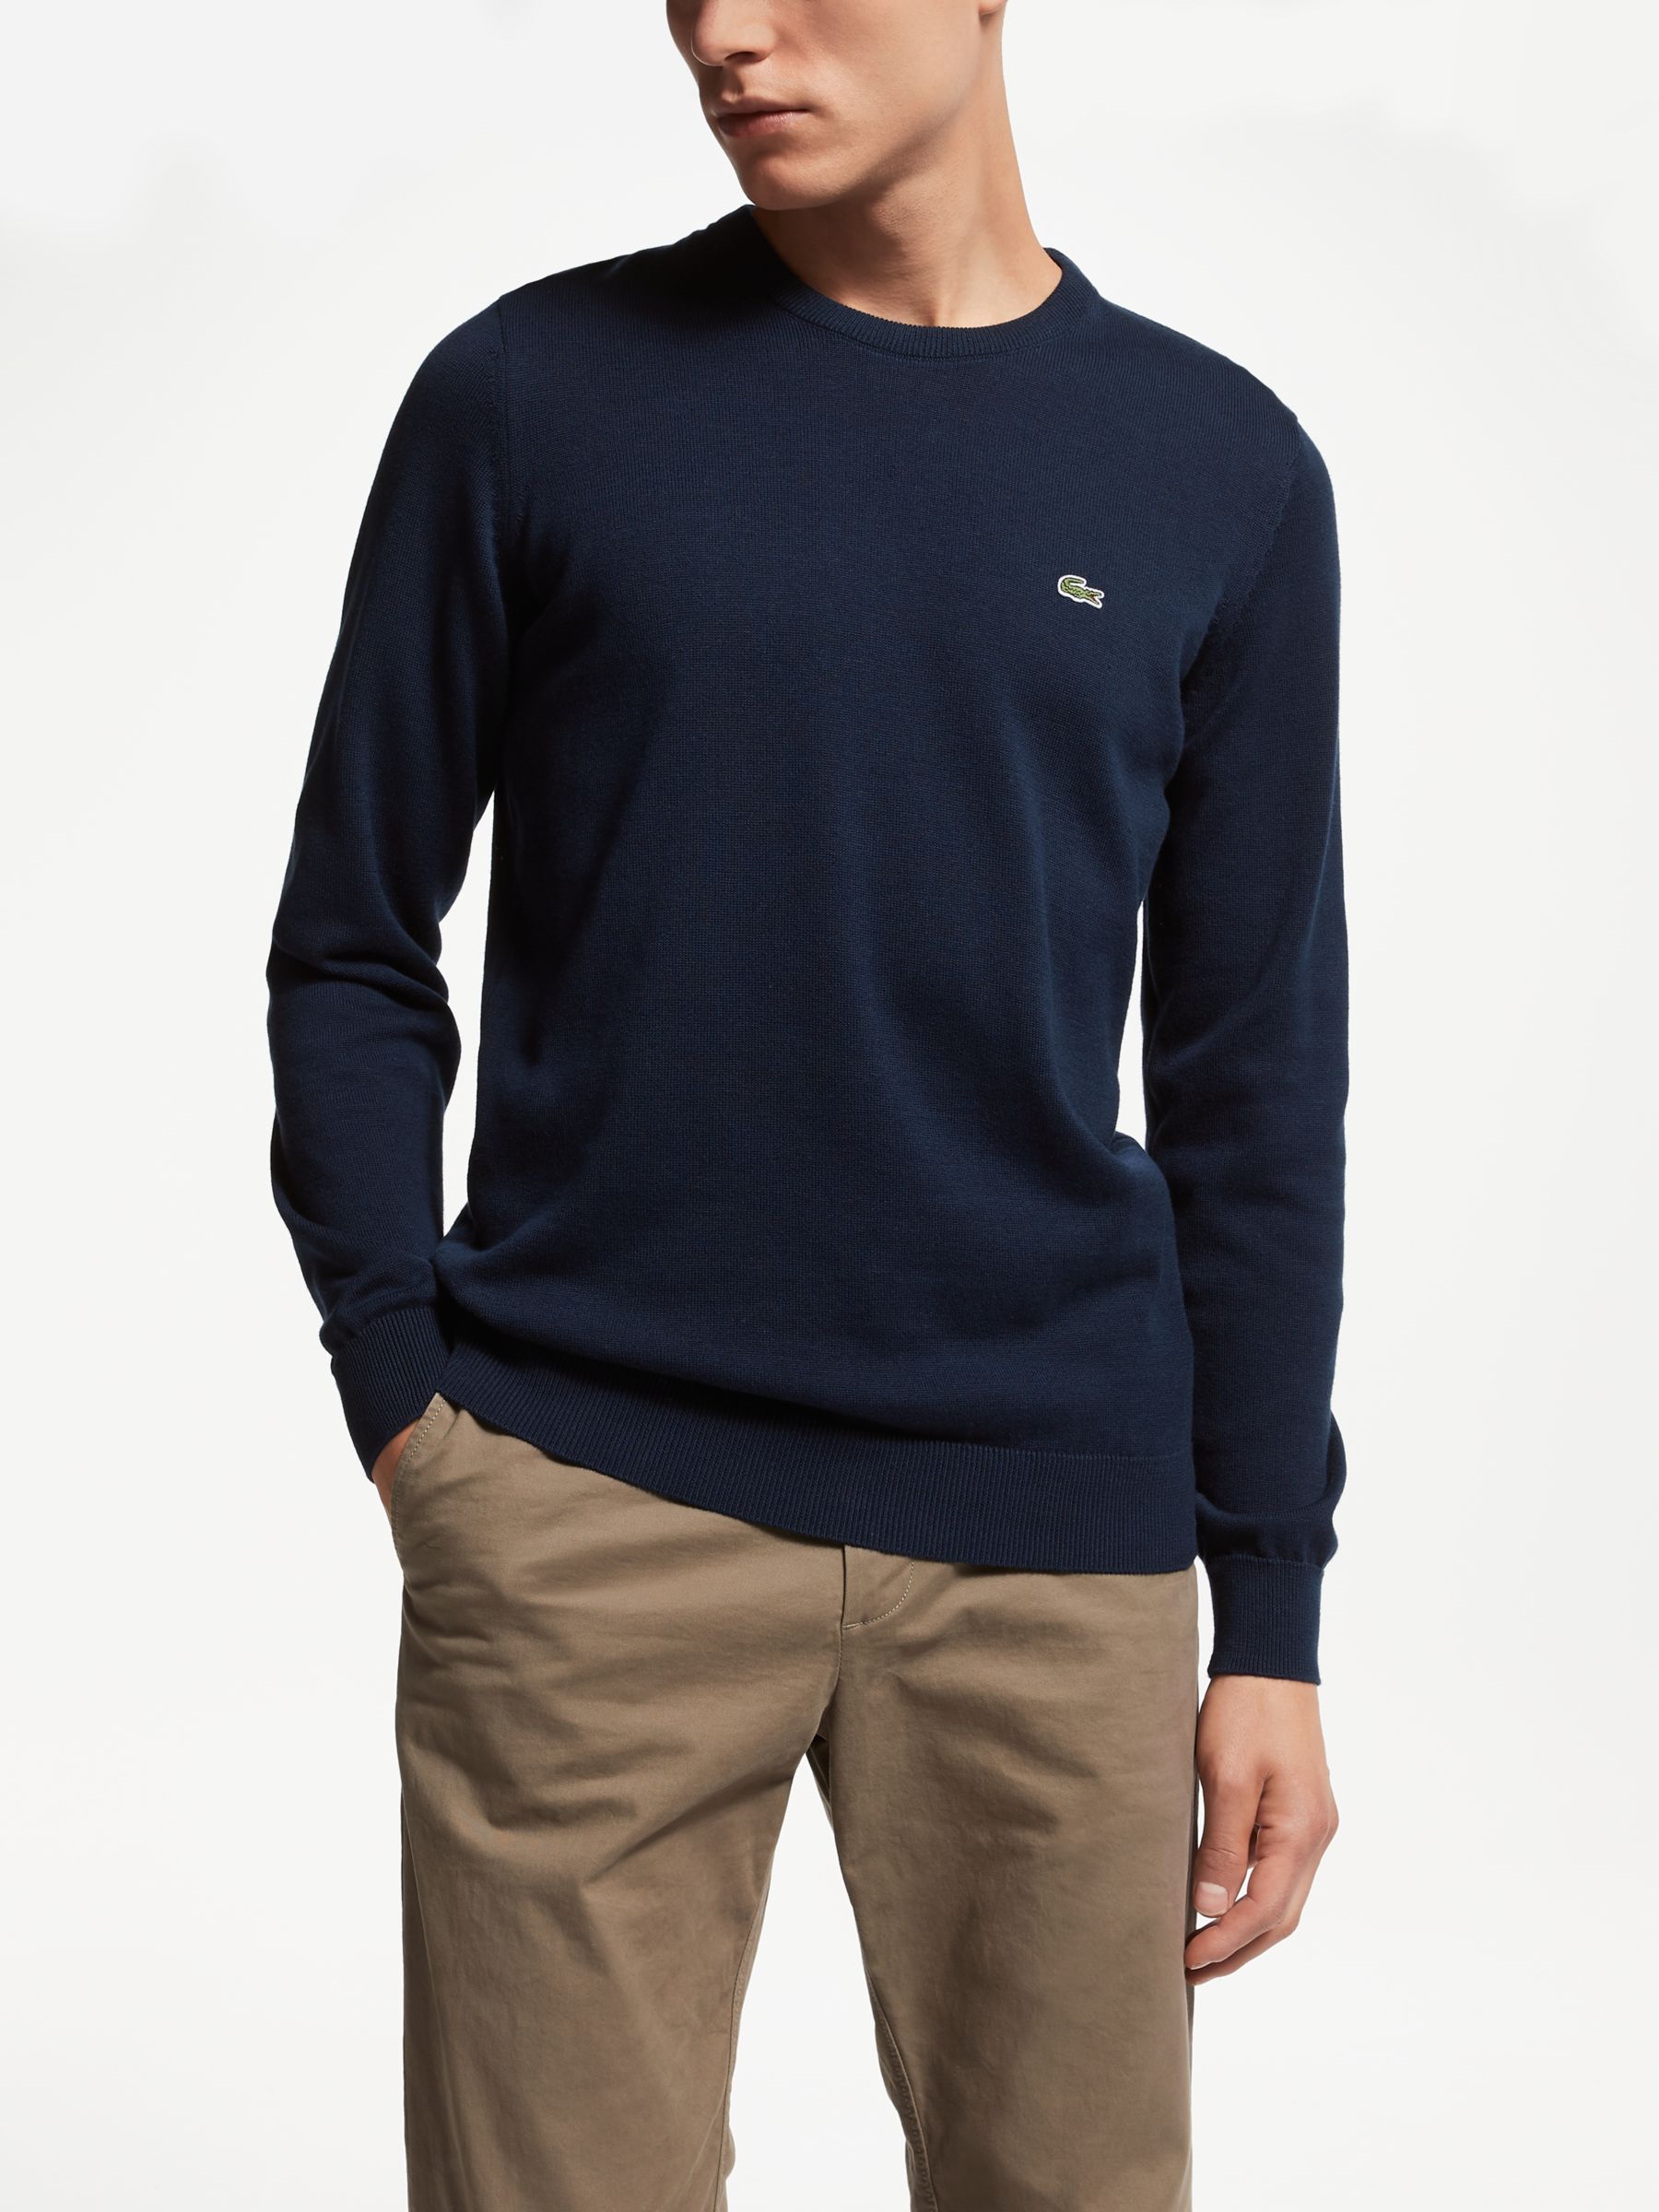 lacoste navy blue jumper